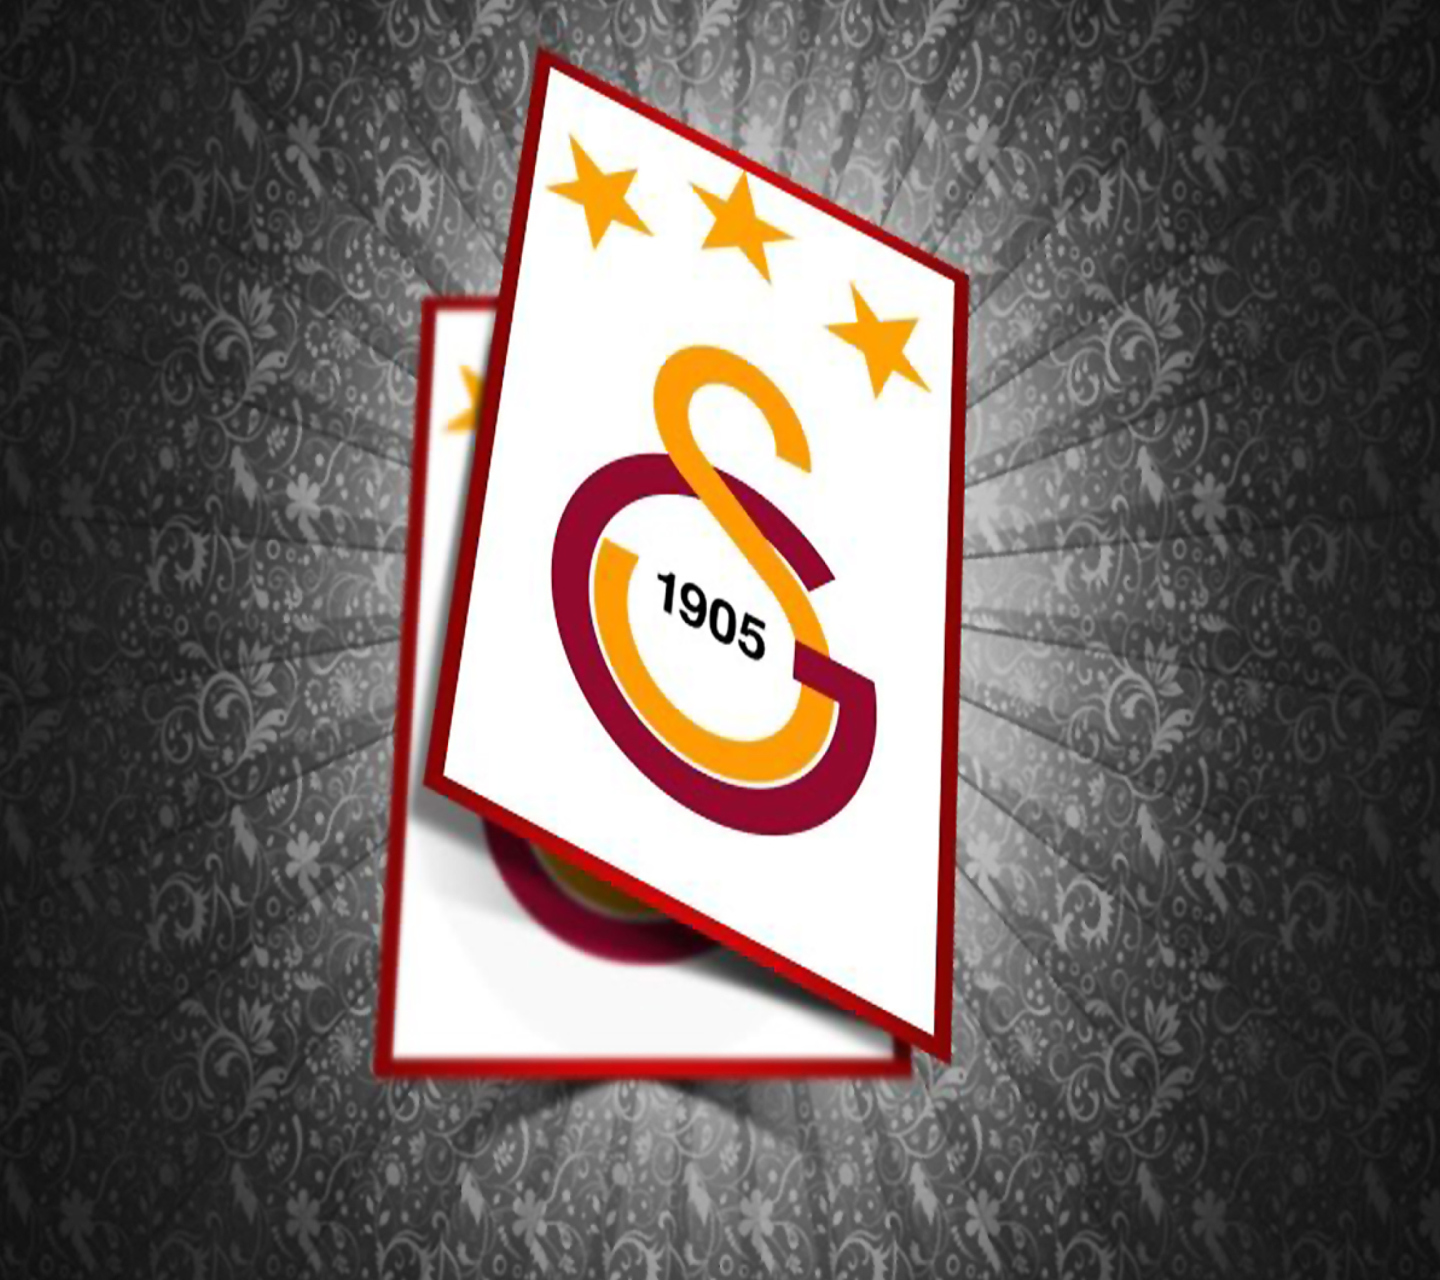 Das Galatasaray Wallpaper 1440x1280